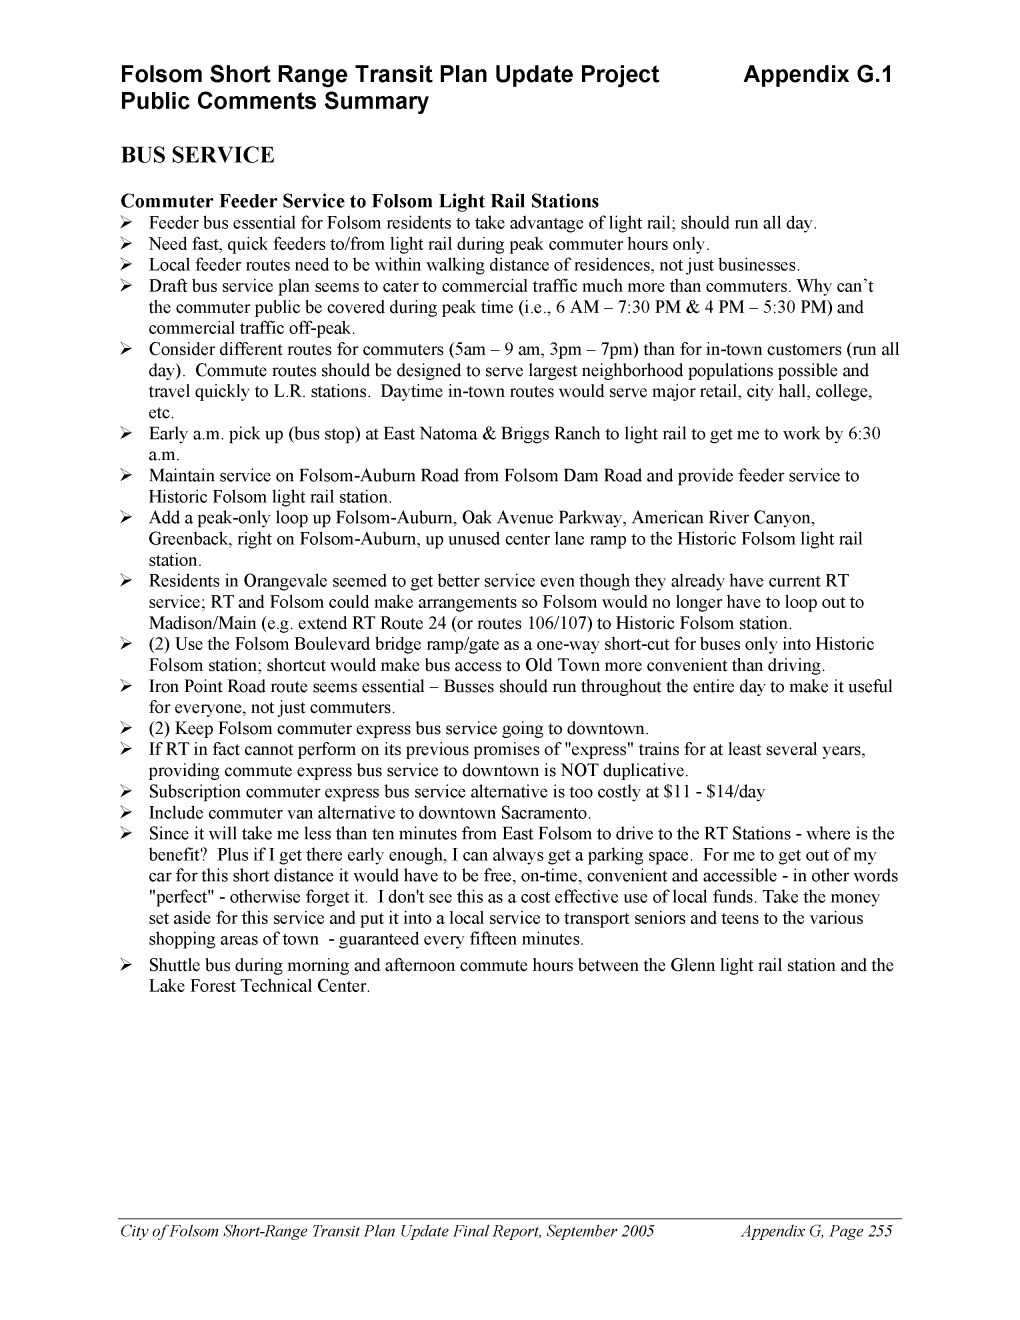 Folsom Short Range Transit Plan Update Project Appendix G.1 Public